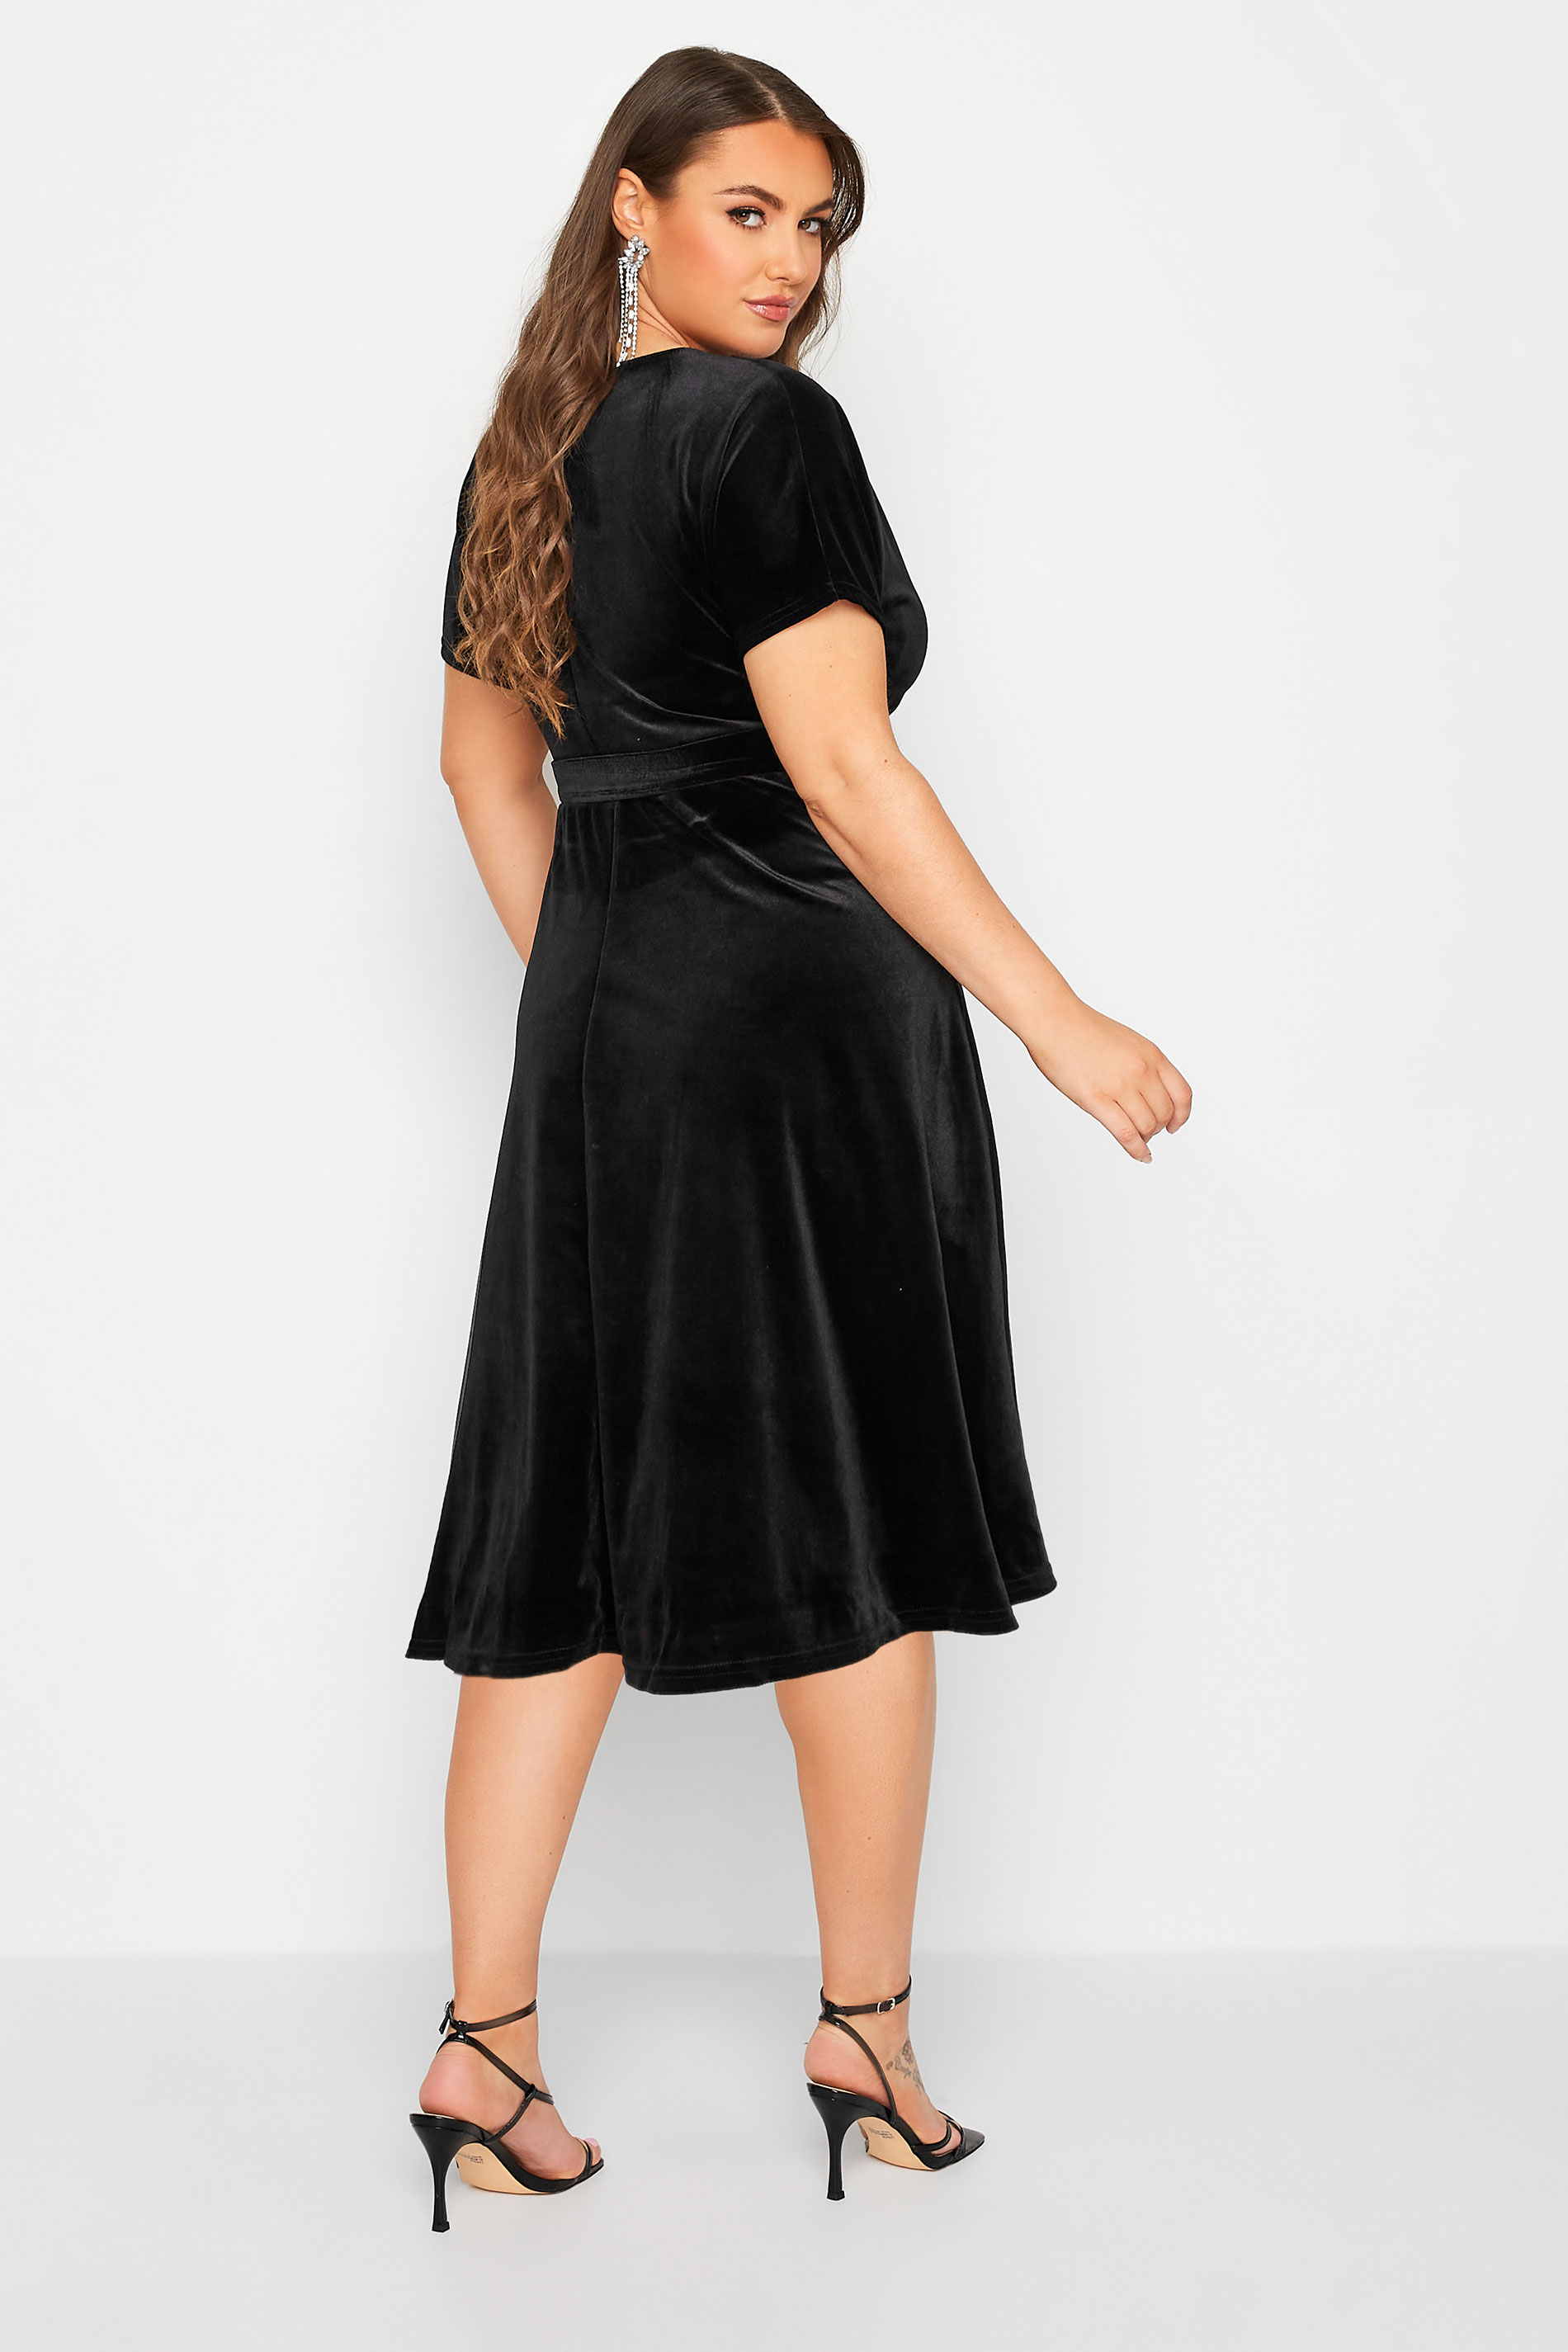 YOURS LONDON Curve Black Velvet Wrap Skater Dress | Yours Clothing 3